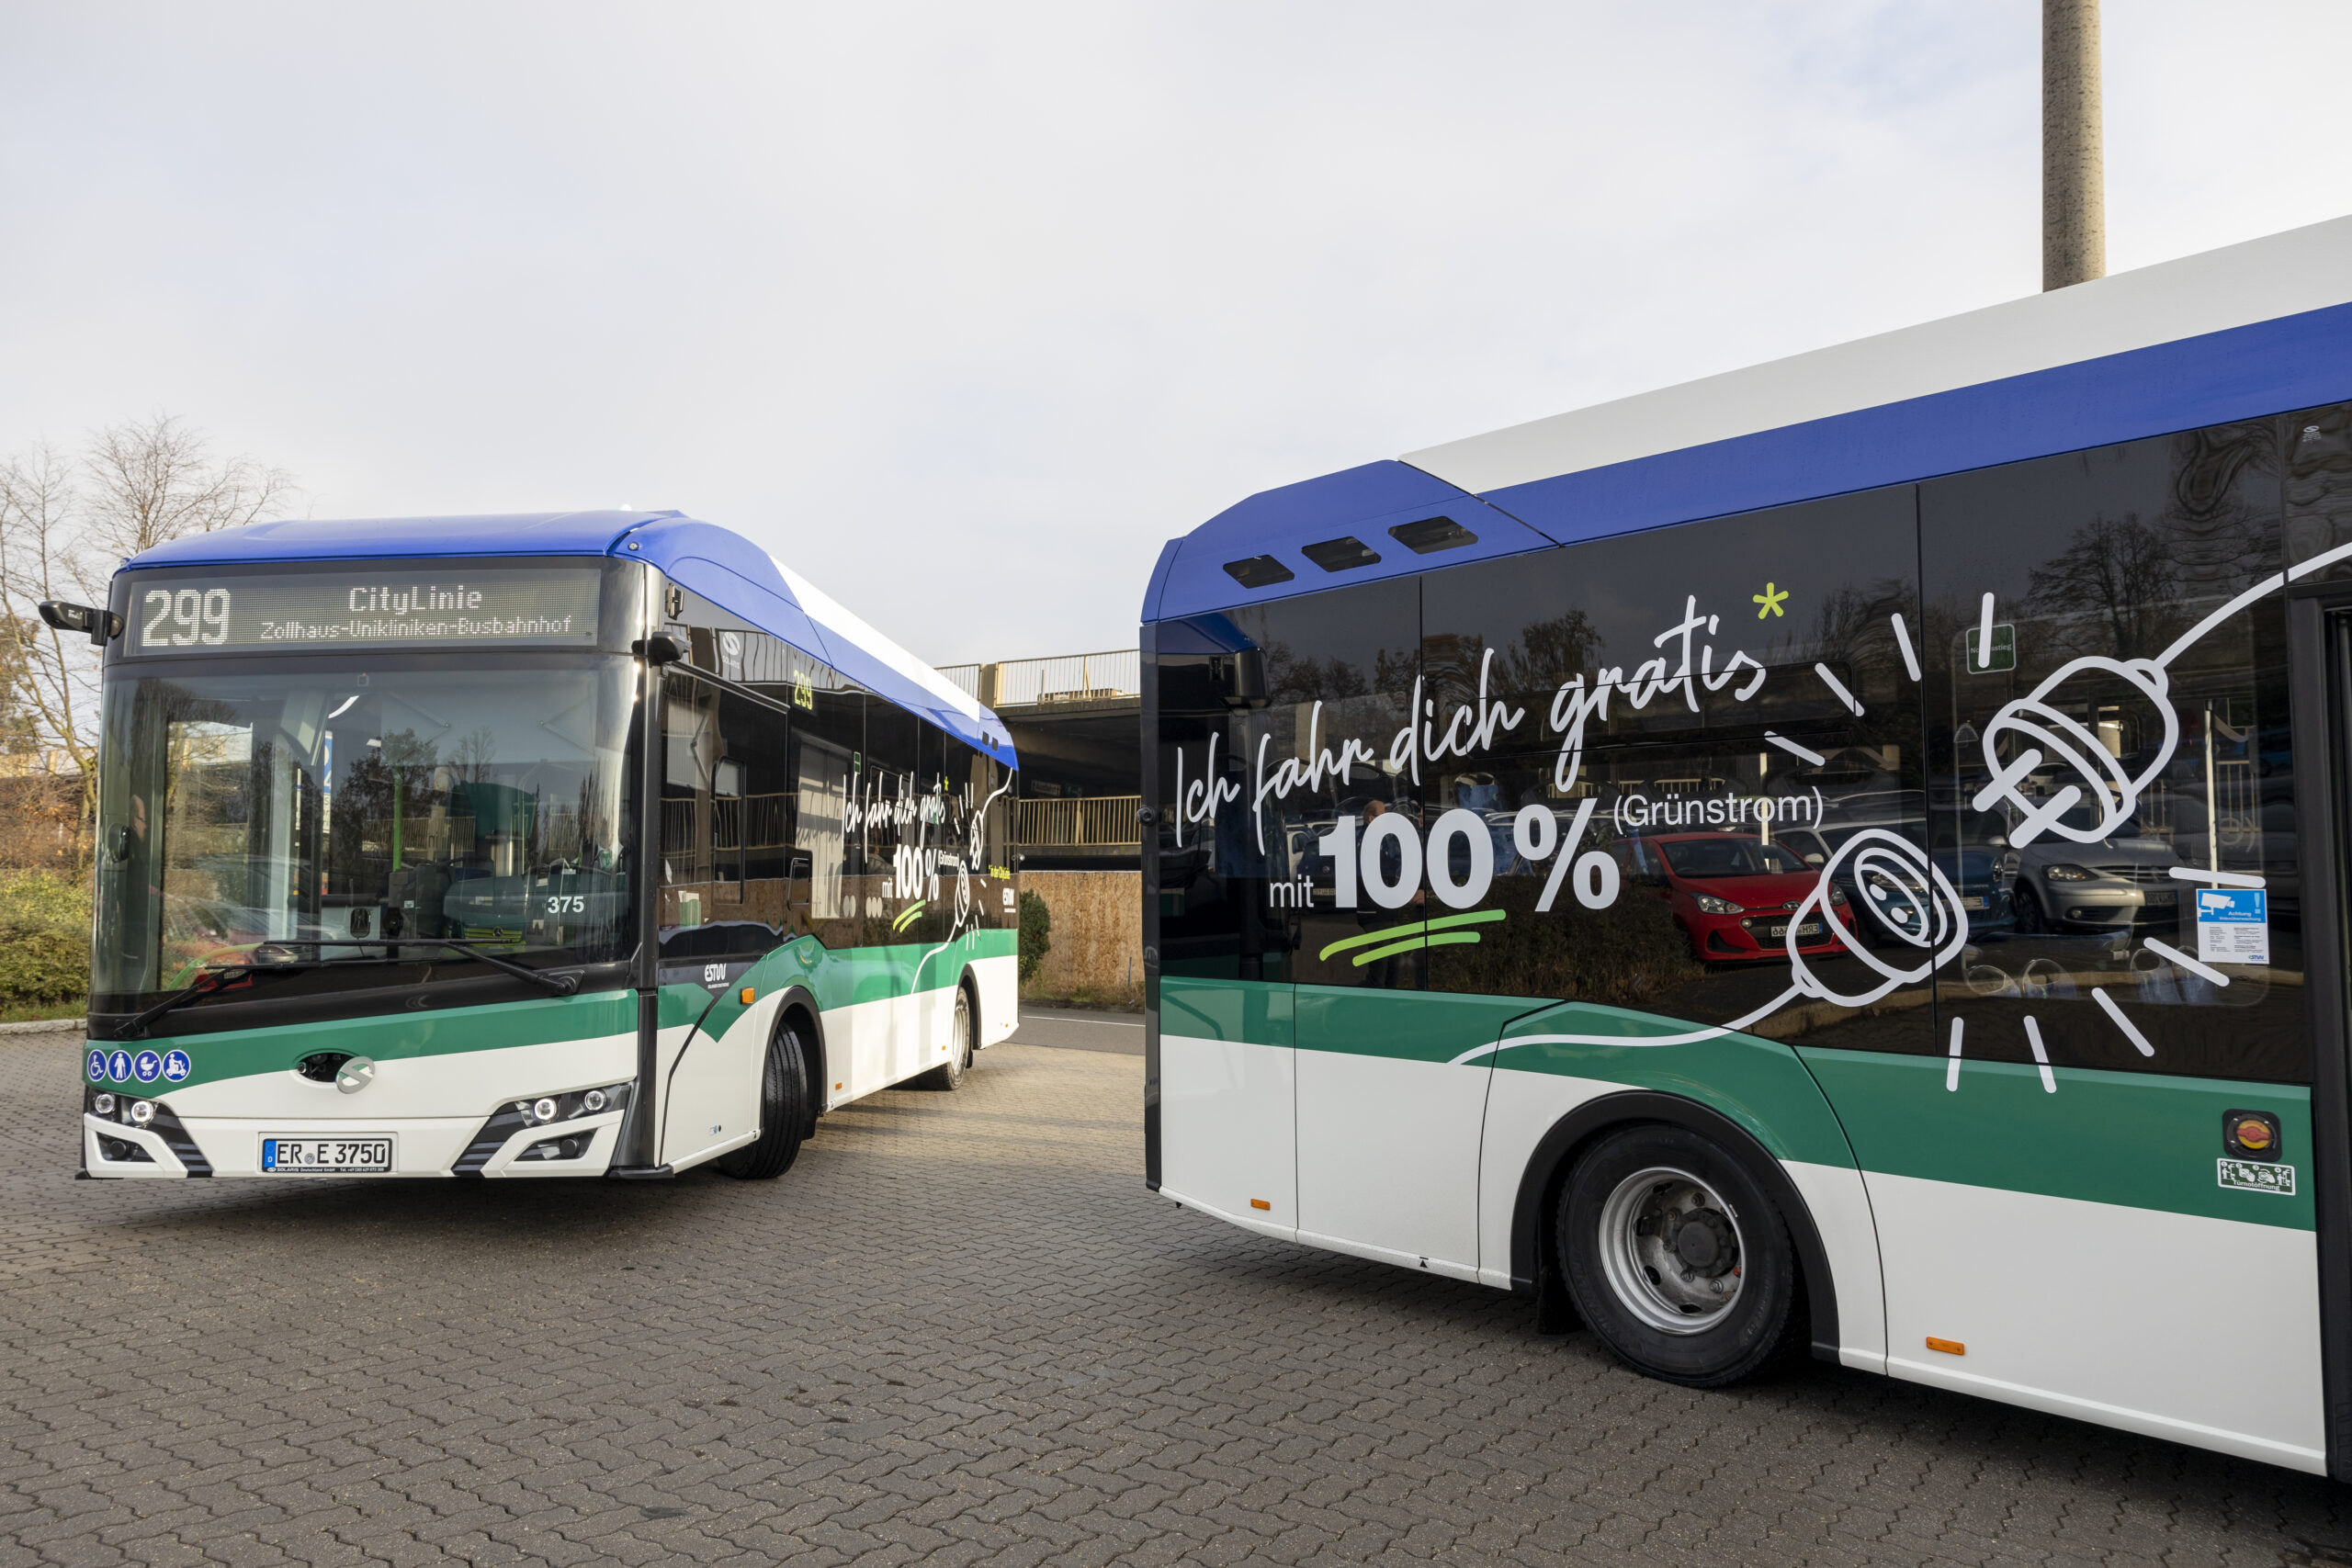 Two buses alongside each other, one daubed in german writing